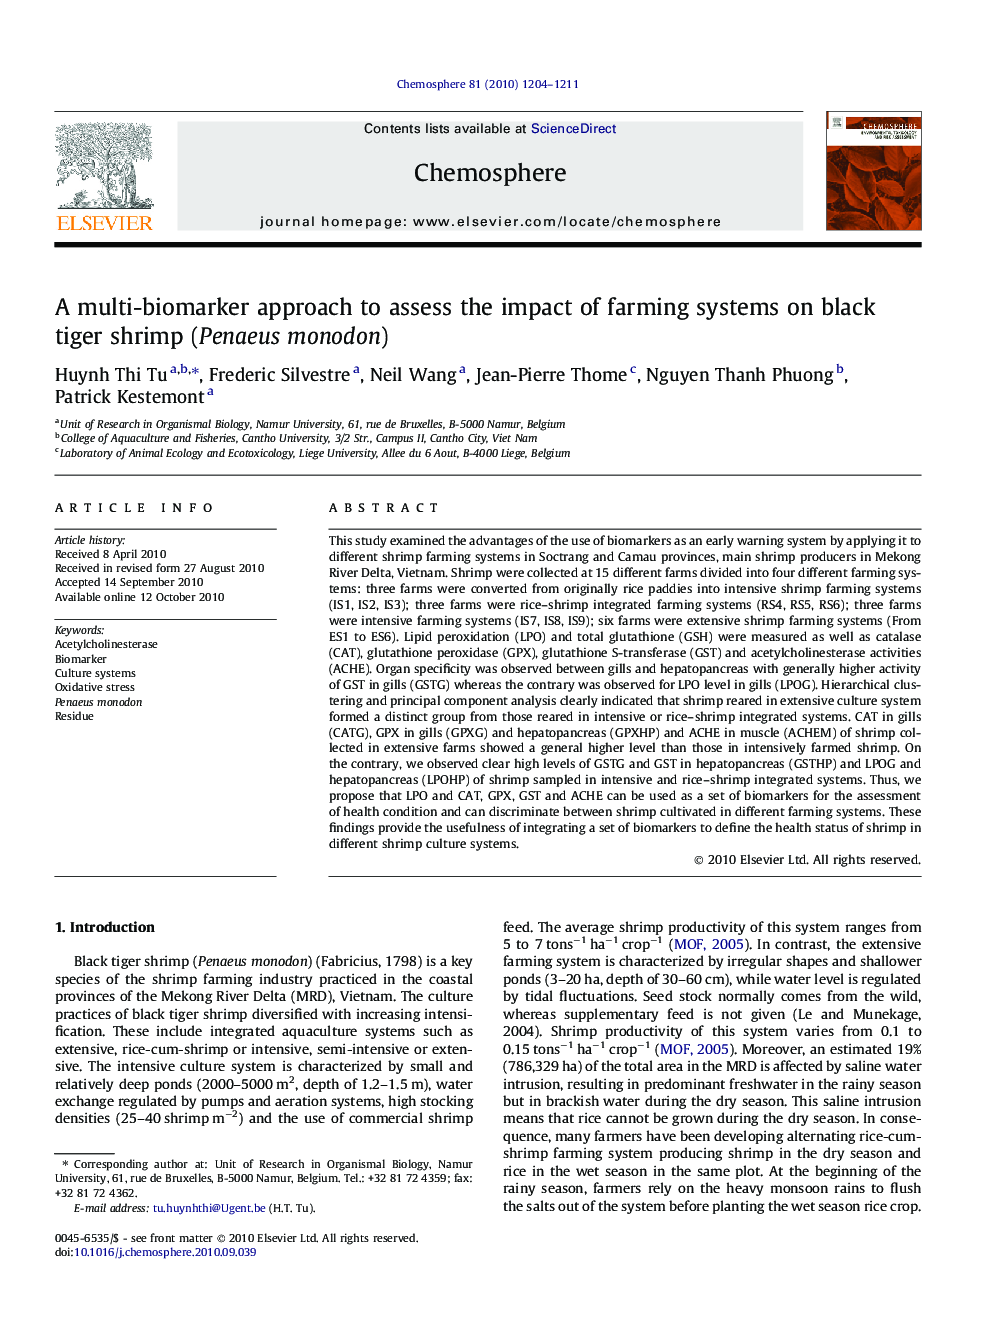 A multi-biomarker approach to assess the impact of farming systems on black tiger shrimp (Penaeus monodon)